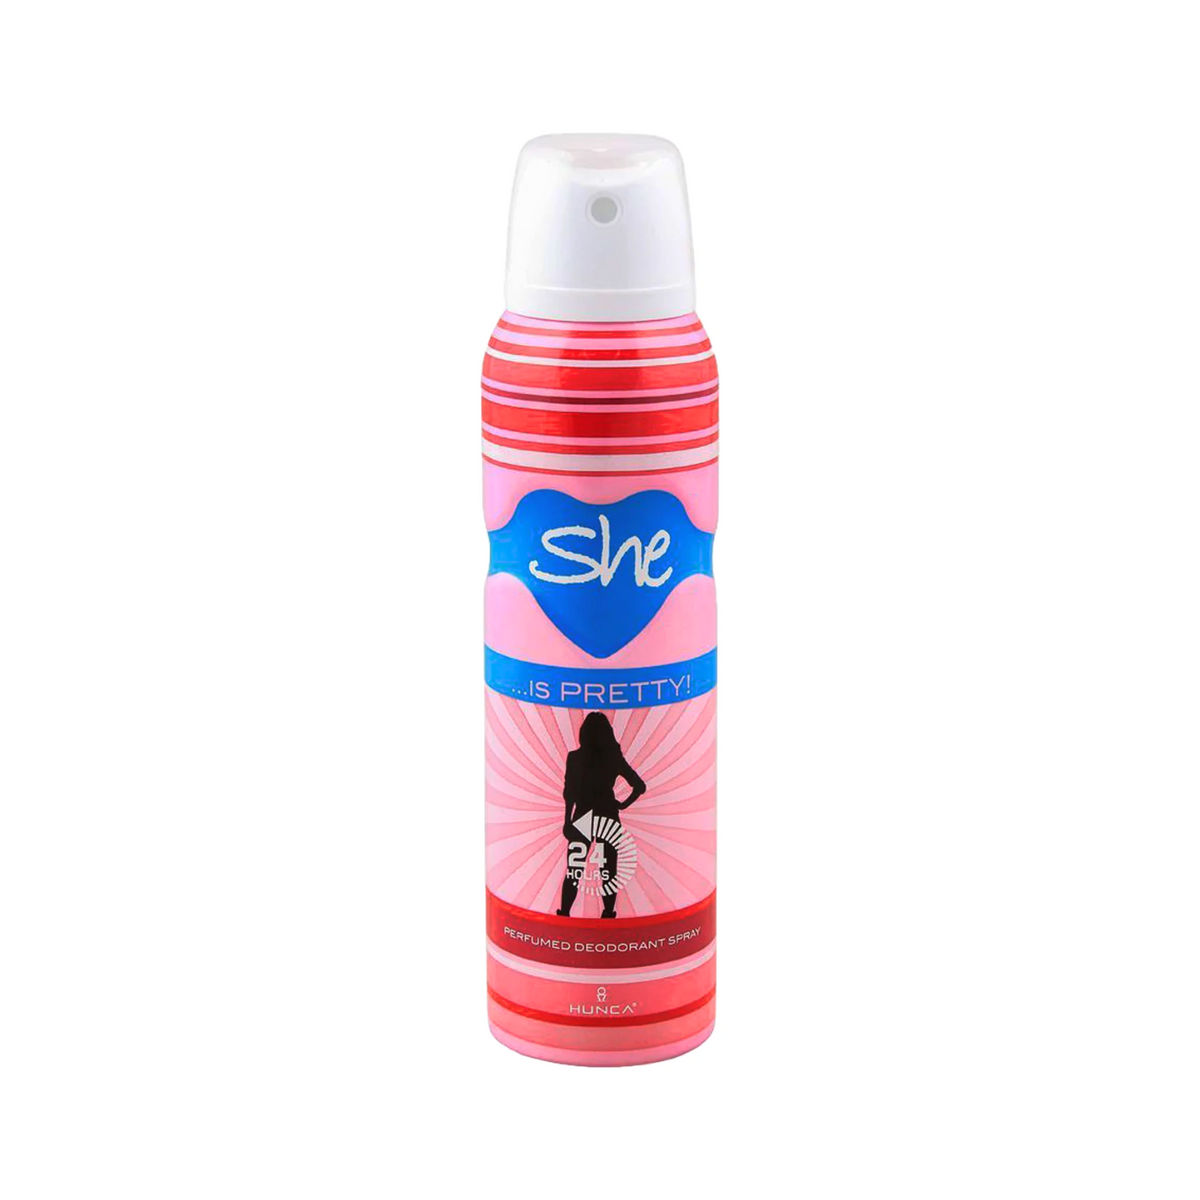 she-is-pretty-deodorant-body-spray-for-women-150ml